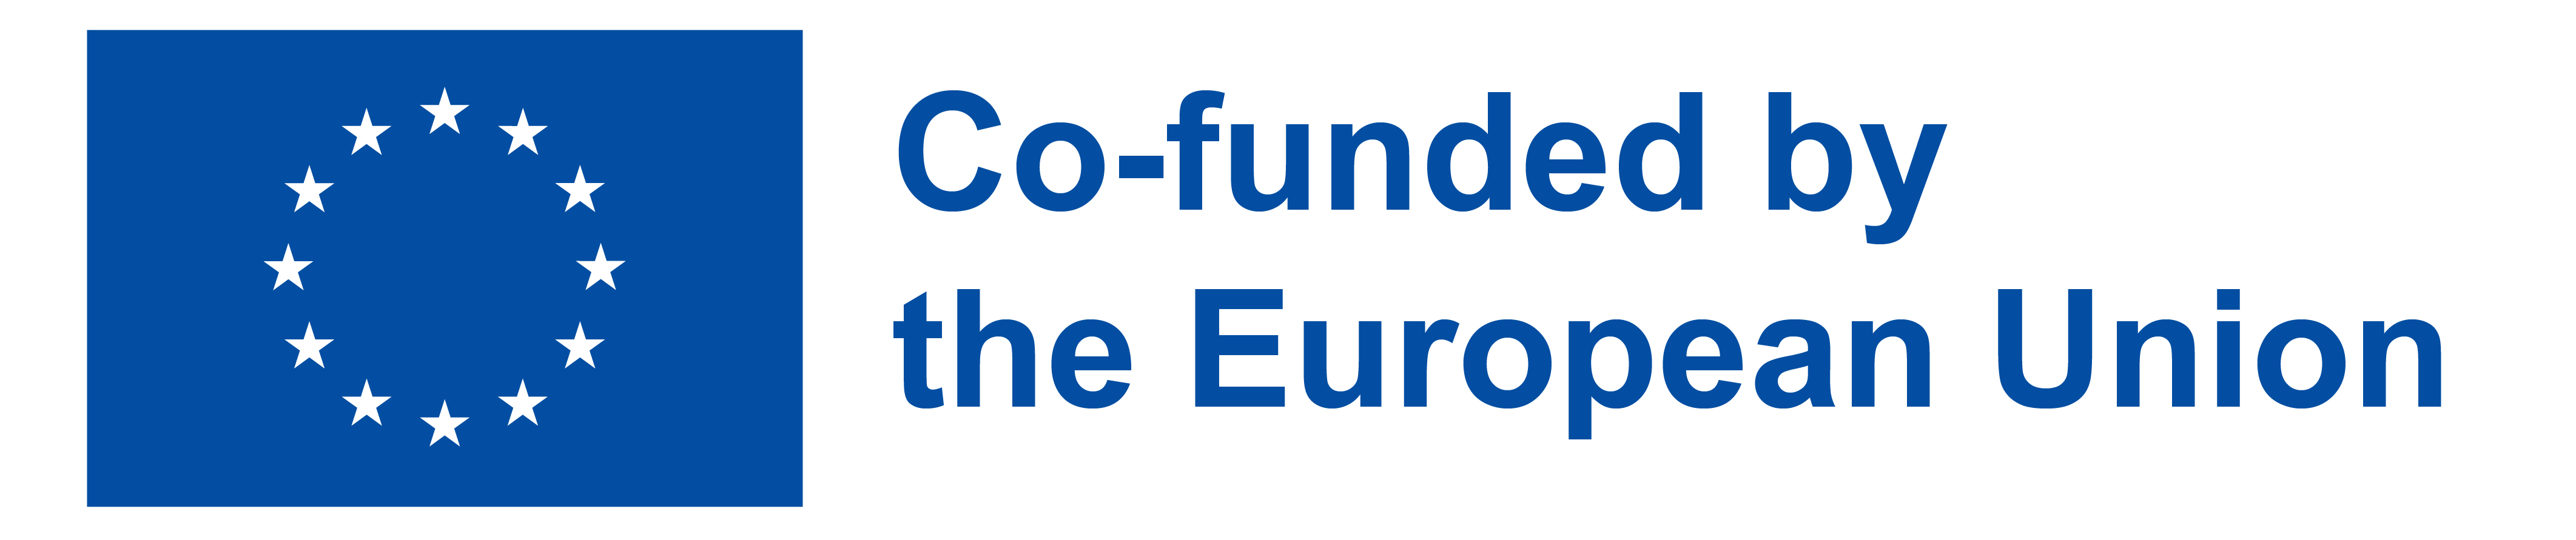 logo Unii Europejskiej oraz napis Co-funded by the European Union